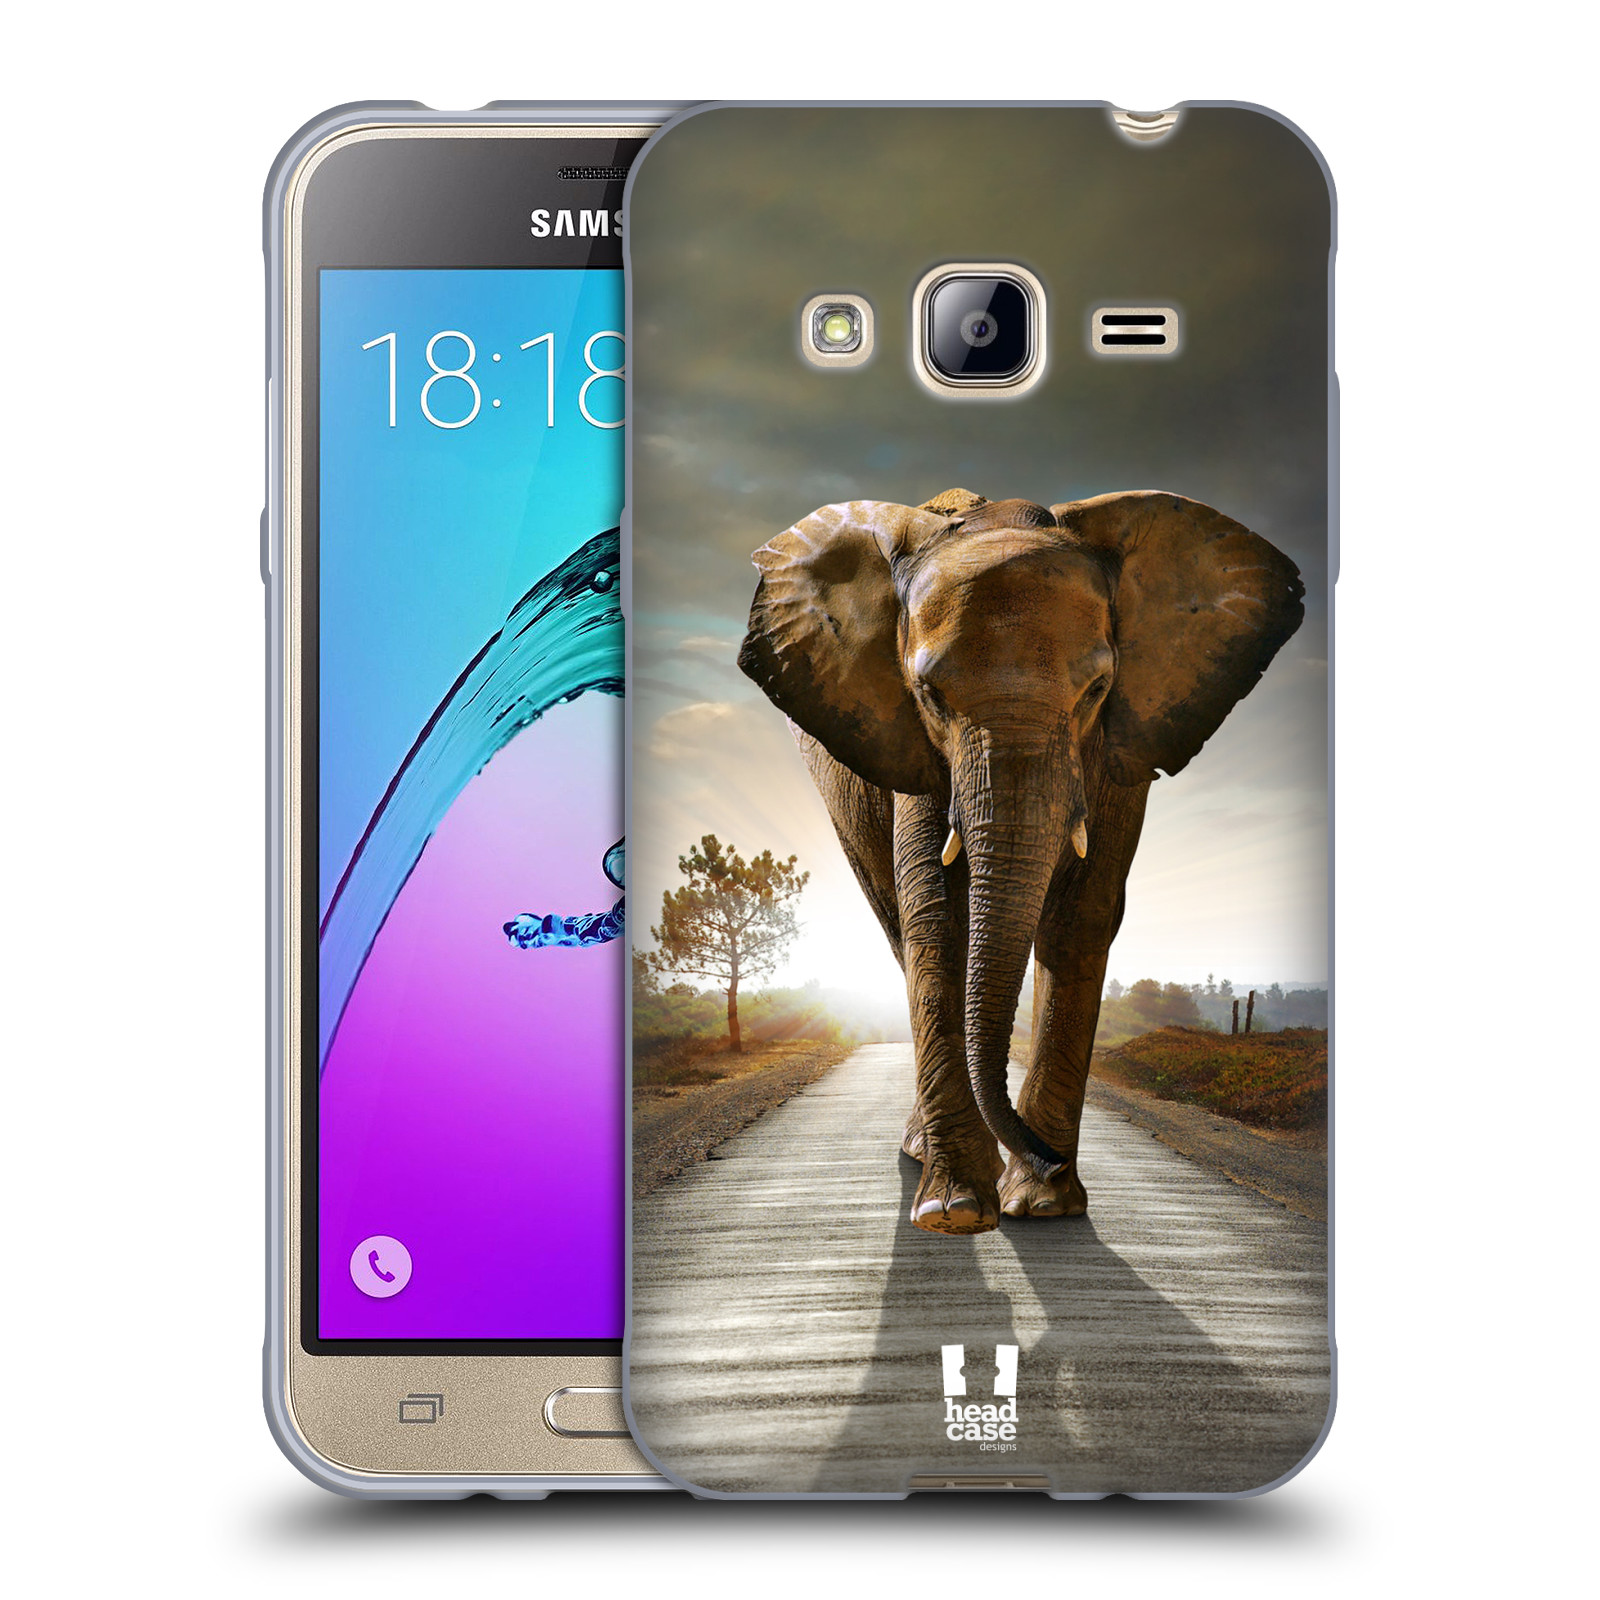 HEAD CASE silikonový obal na mobil Samsung Galaxy J3, J3 2016 vzor Divočina, Divoký život a zvířata foto AFRIKA KRÁČEJÍCI SLON